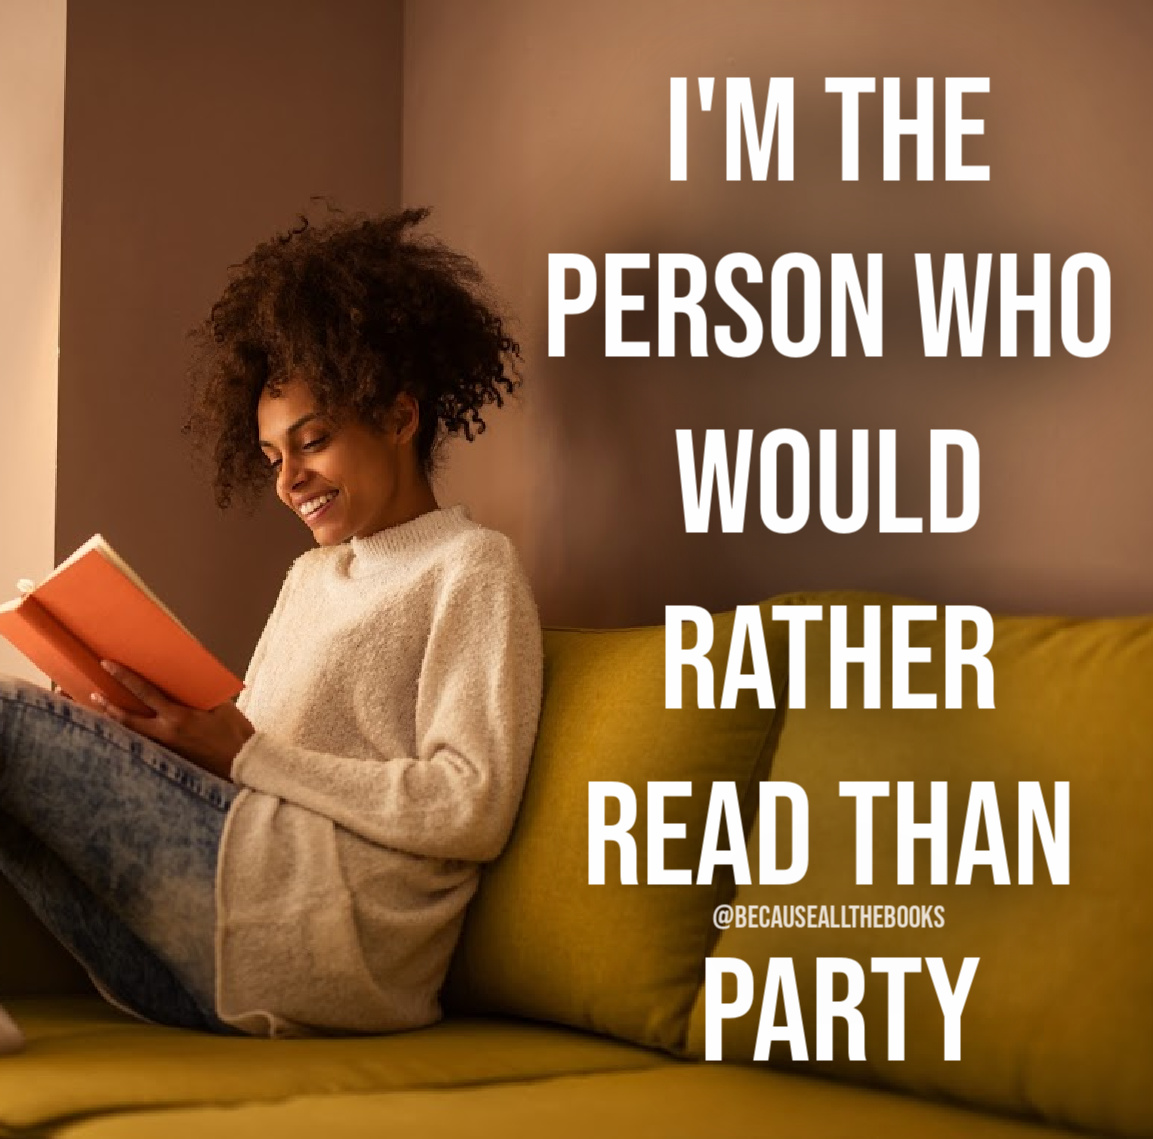 Anyone else? Just me?

#BecauseAllTheBooks #Booktrovert #MoreBooksPlease #LetsRead #ReadMore